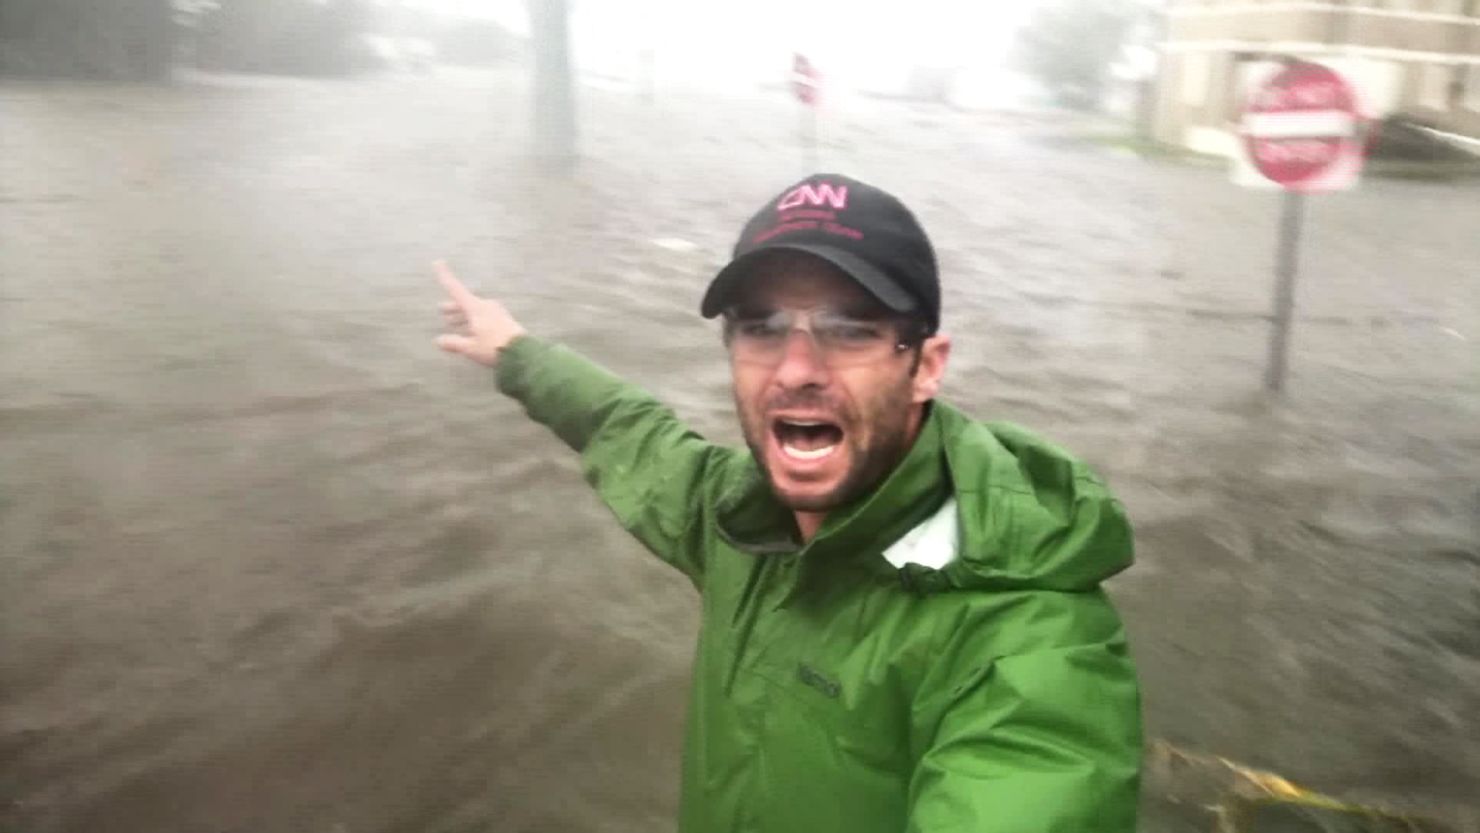 CNN meteorologist Derek Van Dam's is covering Hurricane Michael from the Florida panhandle